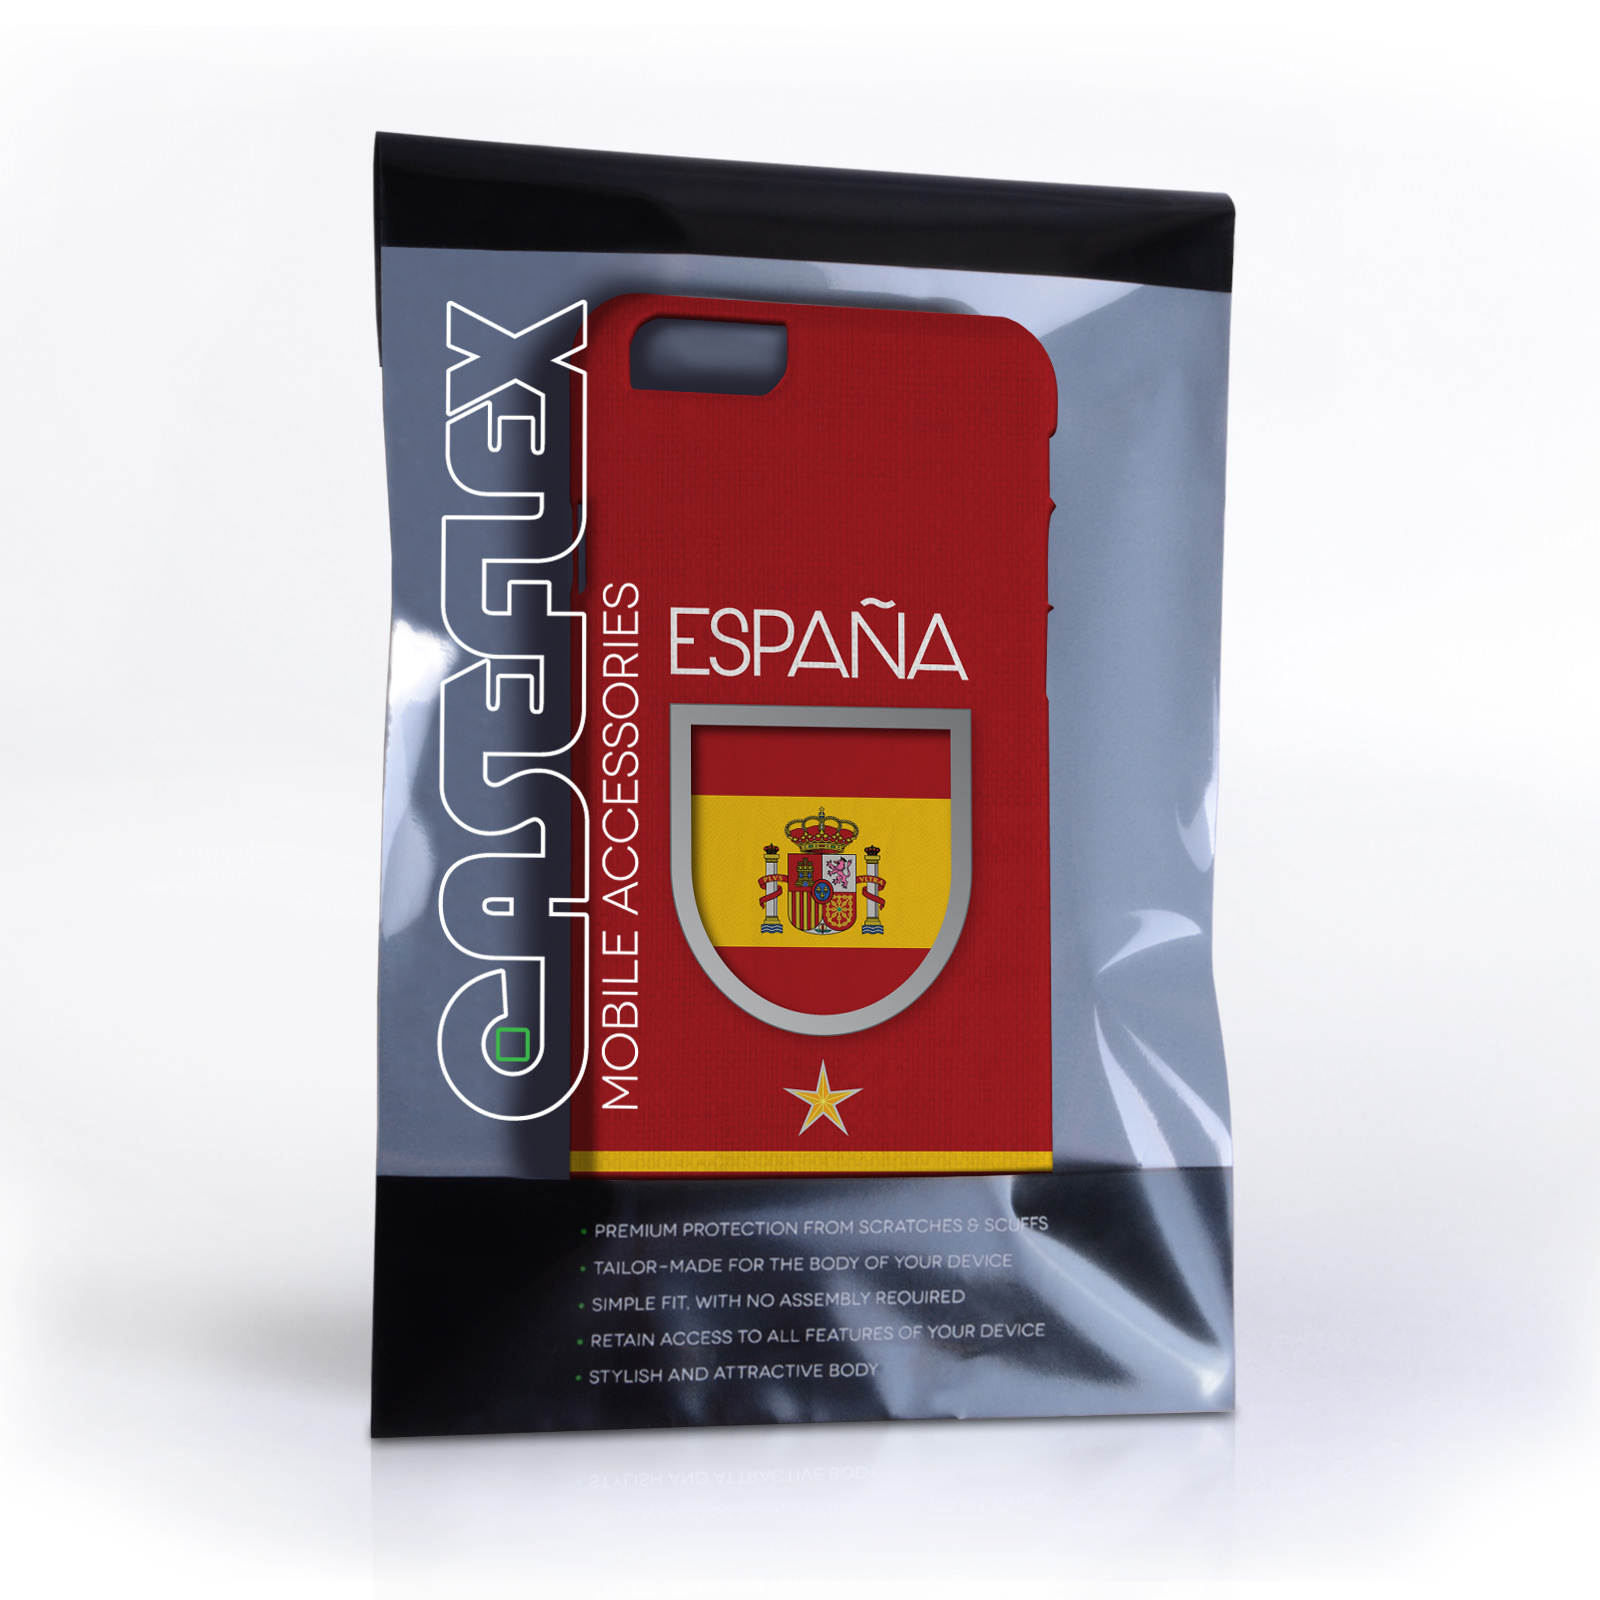 Caseflex iPhone 6 and 6s Espana World Cup Case